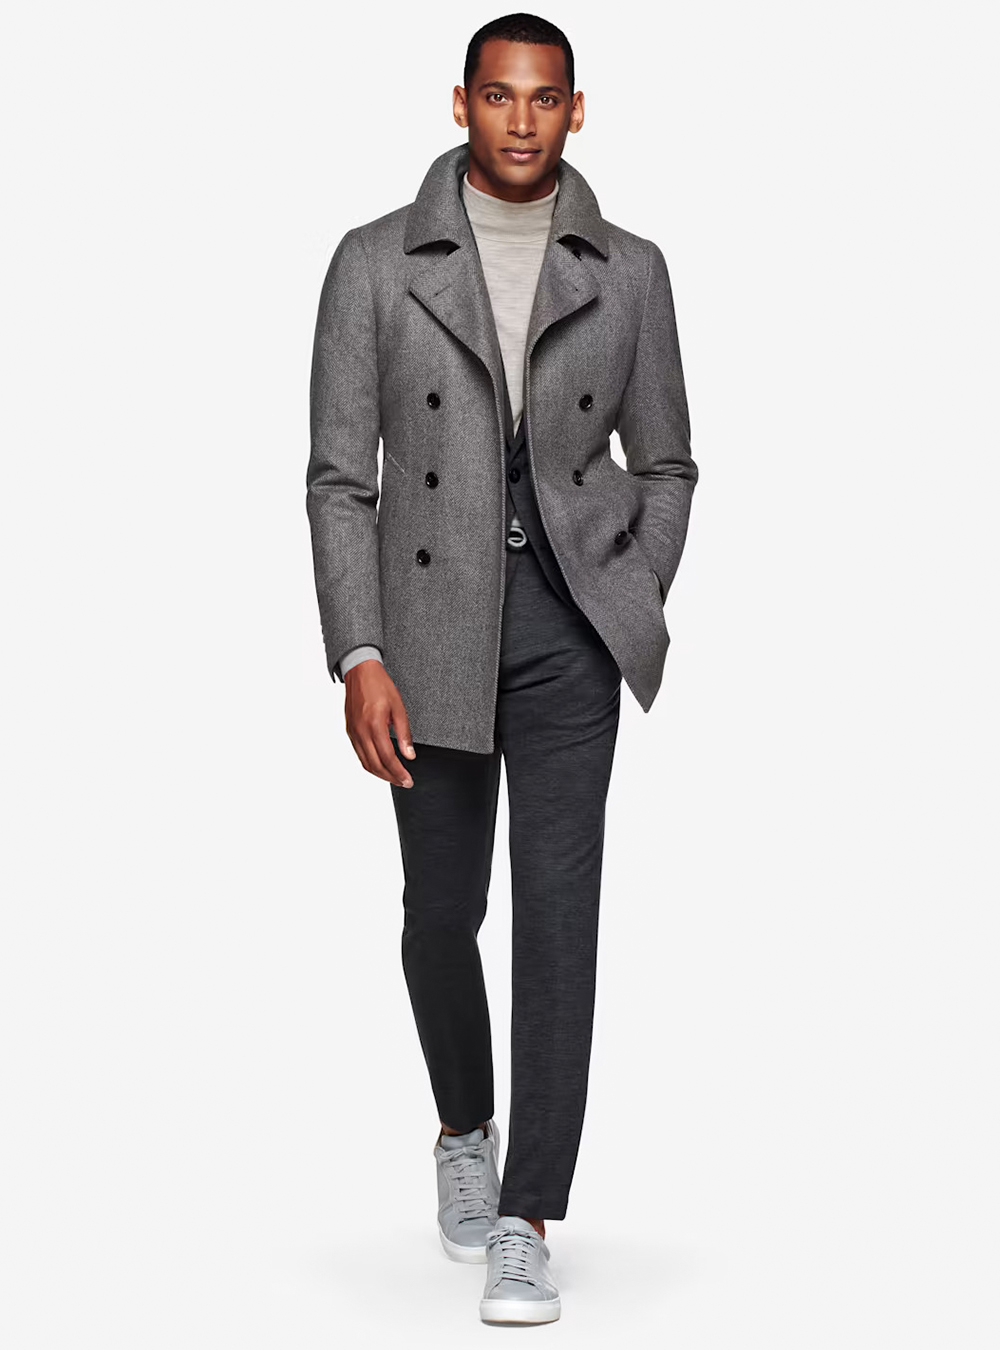 grey pea coat, charcoal-grey suit, light tan turtleneck, and grey sneakers